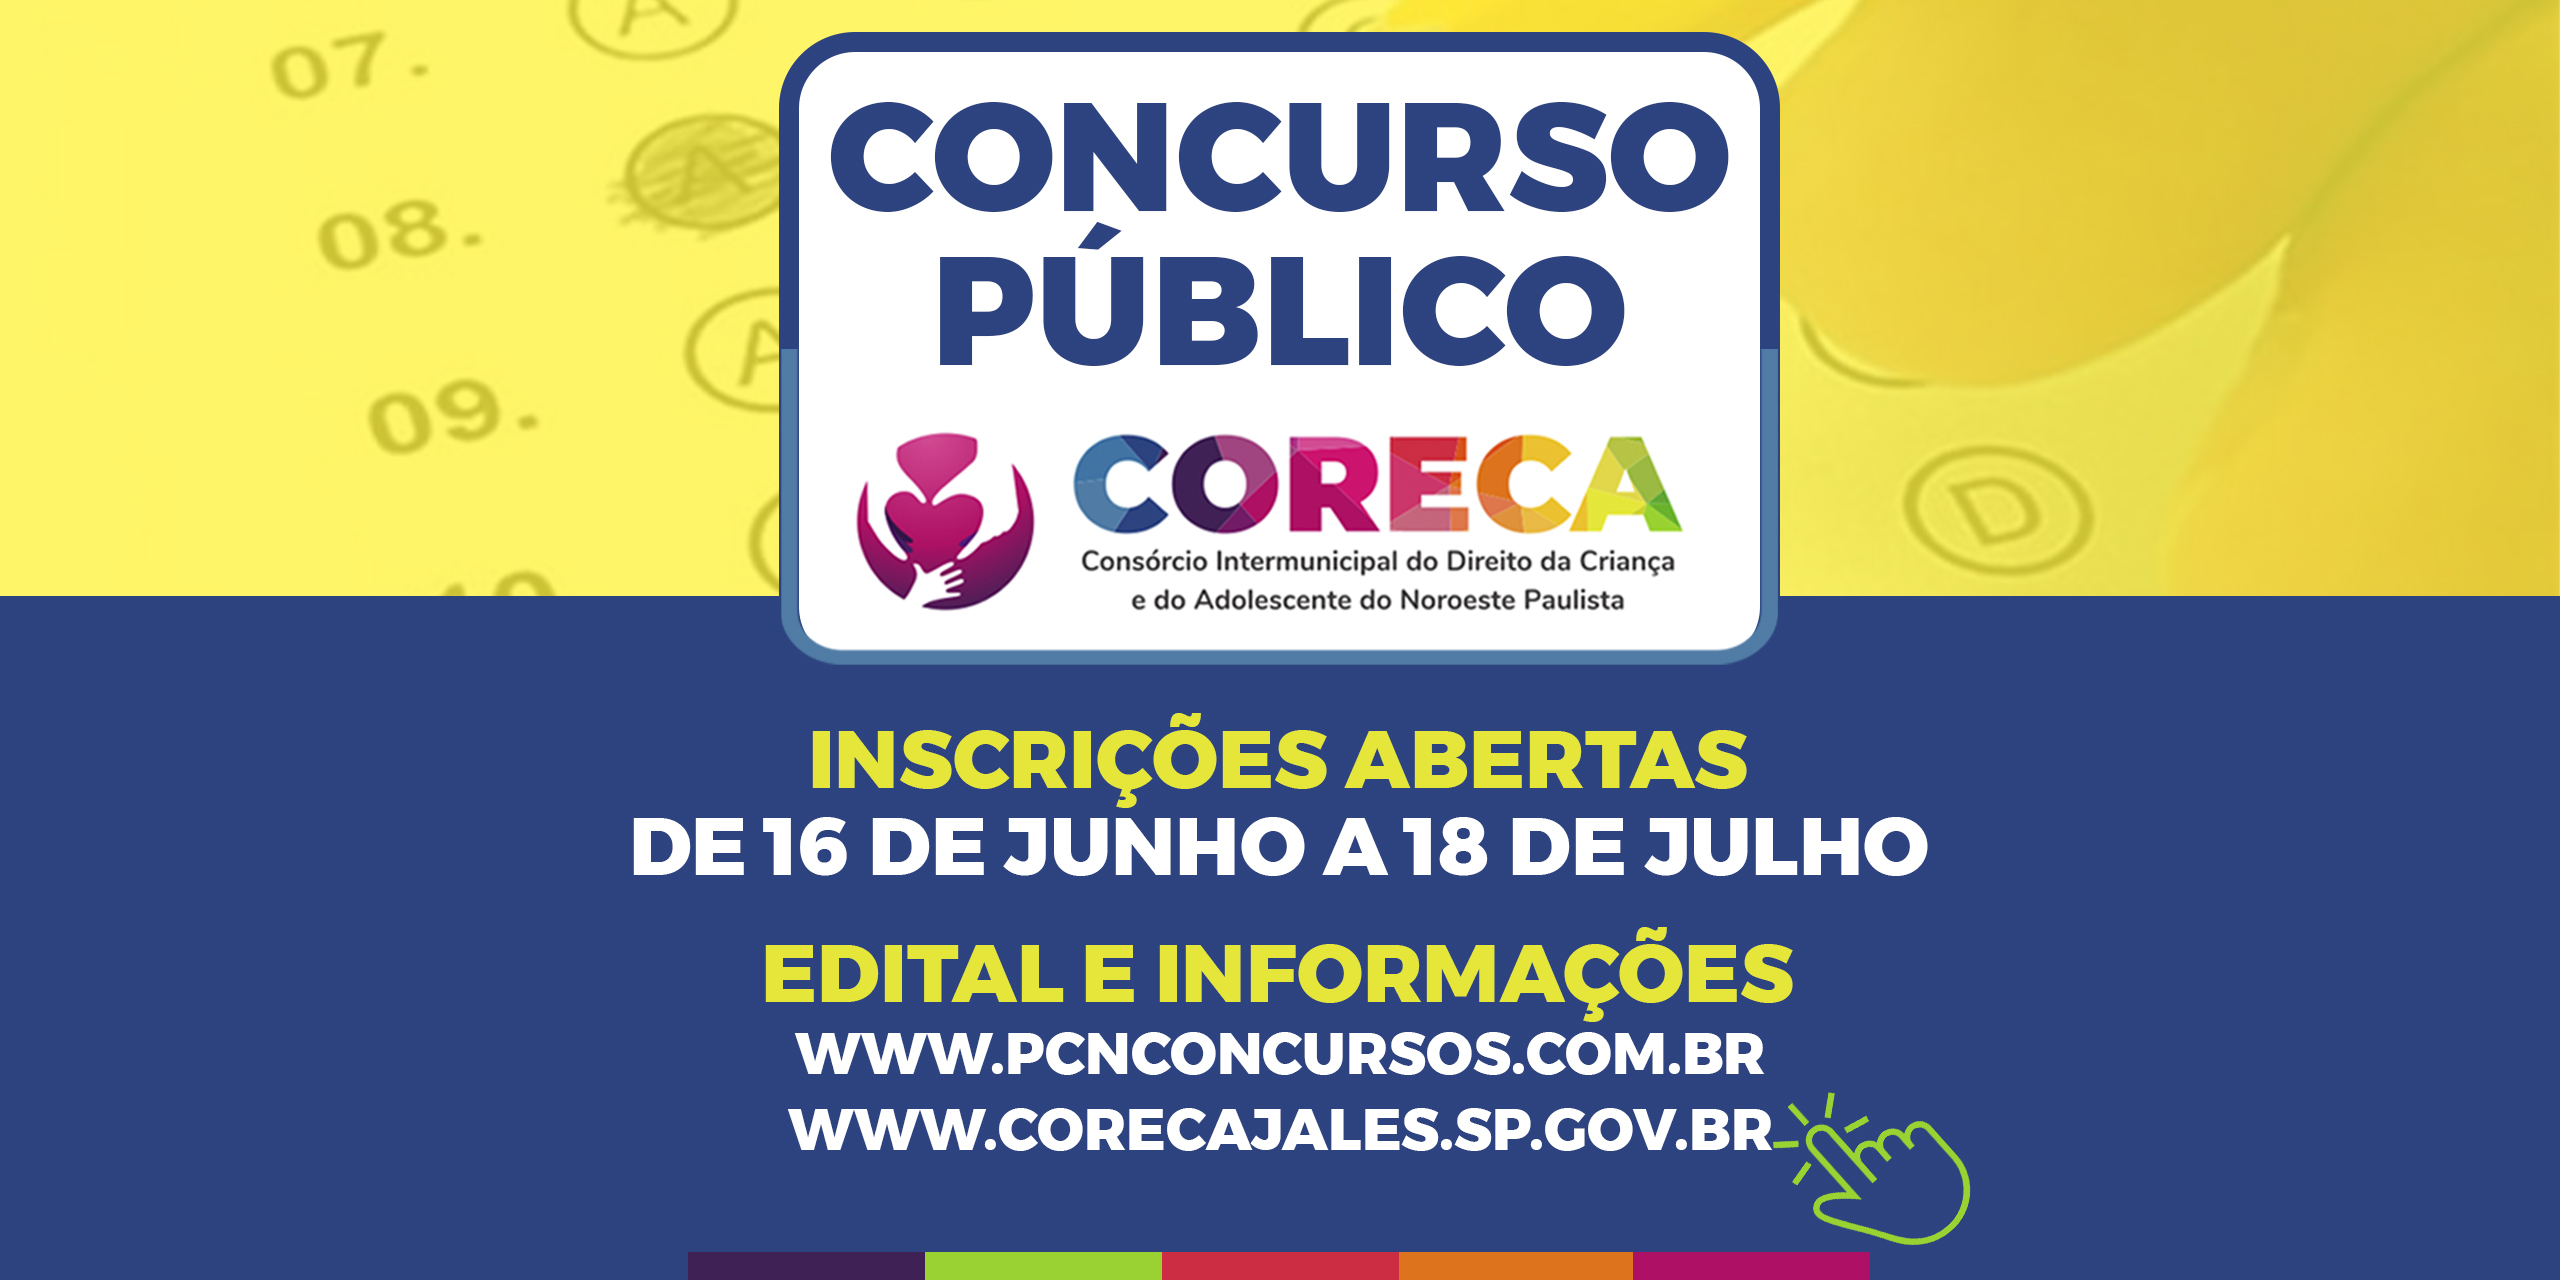 CORECA vai realizar Concurso Público para cargos de cuidador e auxiliar de serviços gerais